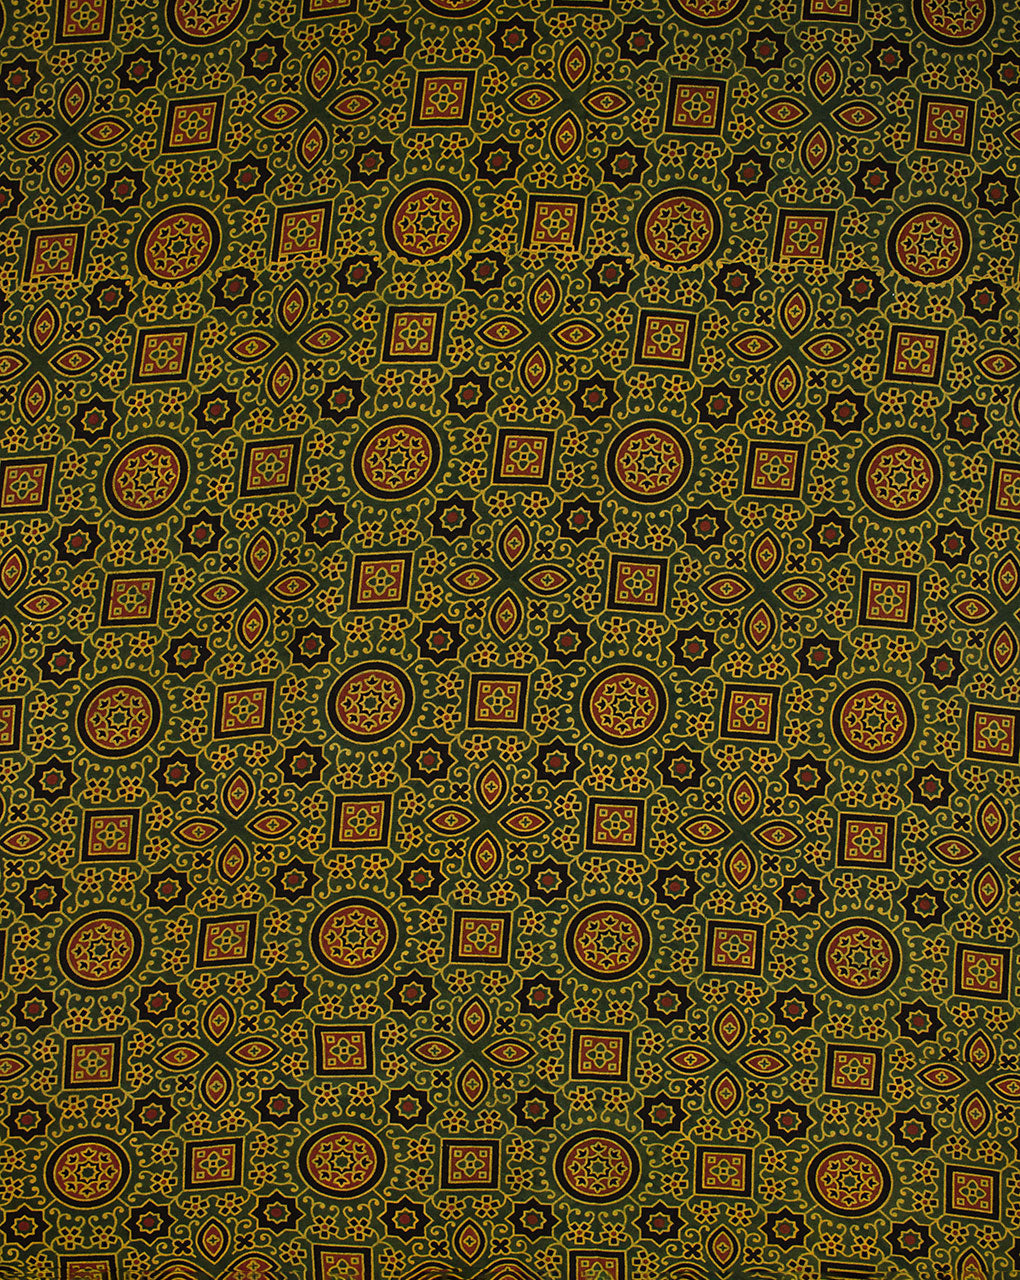 Natural Dye Ajrak Screen Print Rayon Fabric - Fabriclore.com